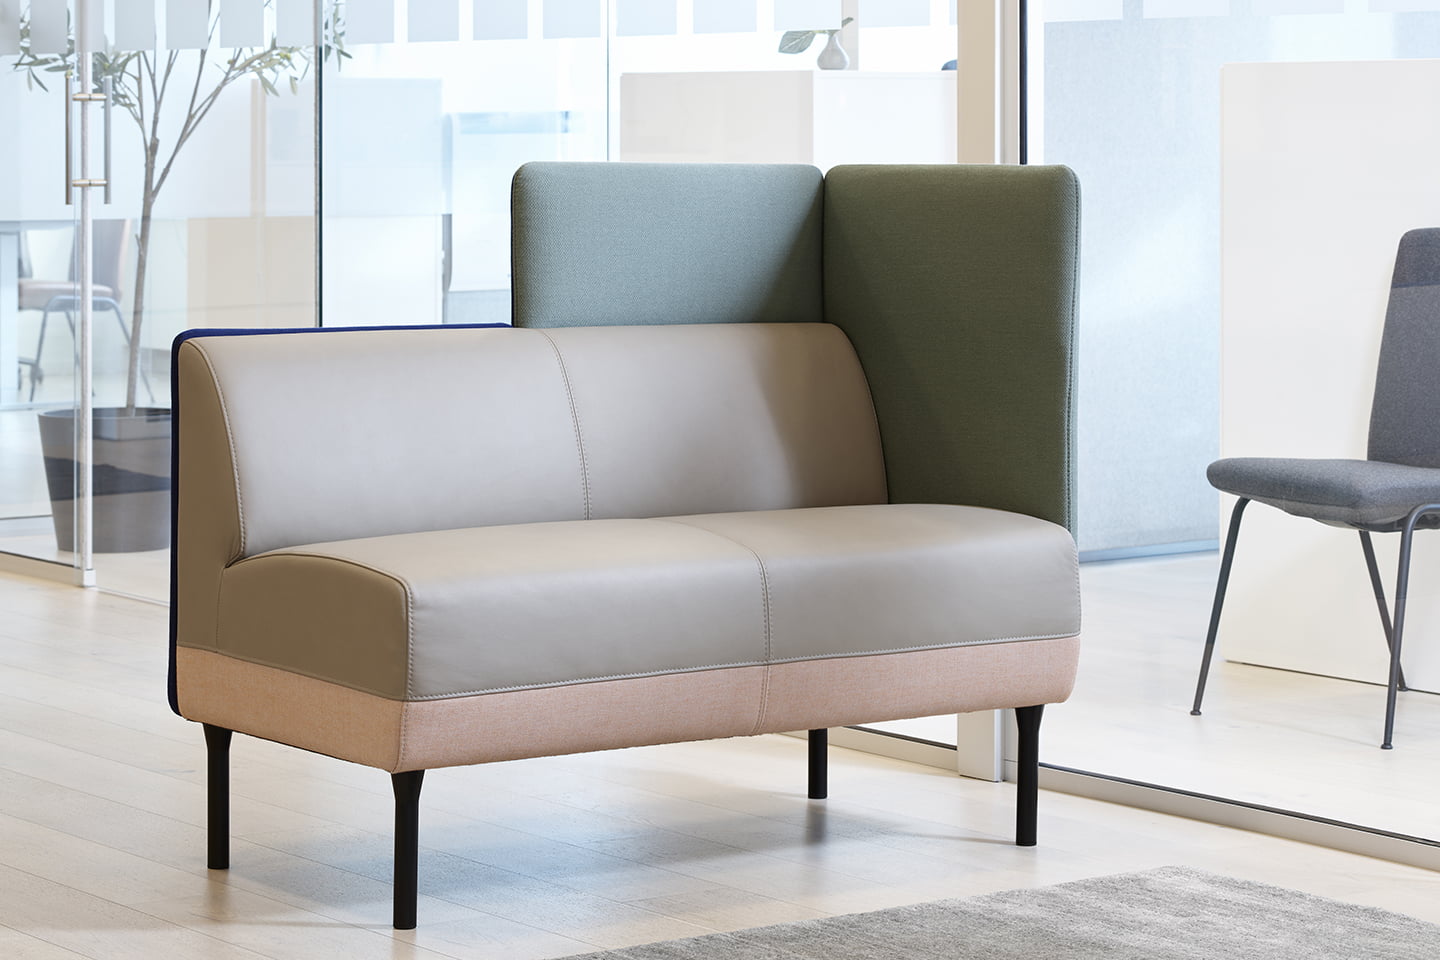 Ekornes Frende module sofa in three different colours